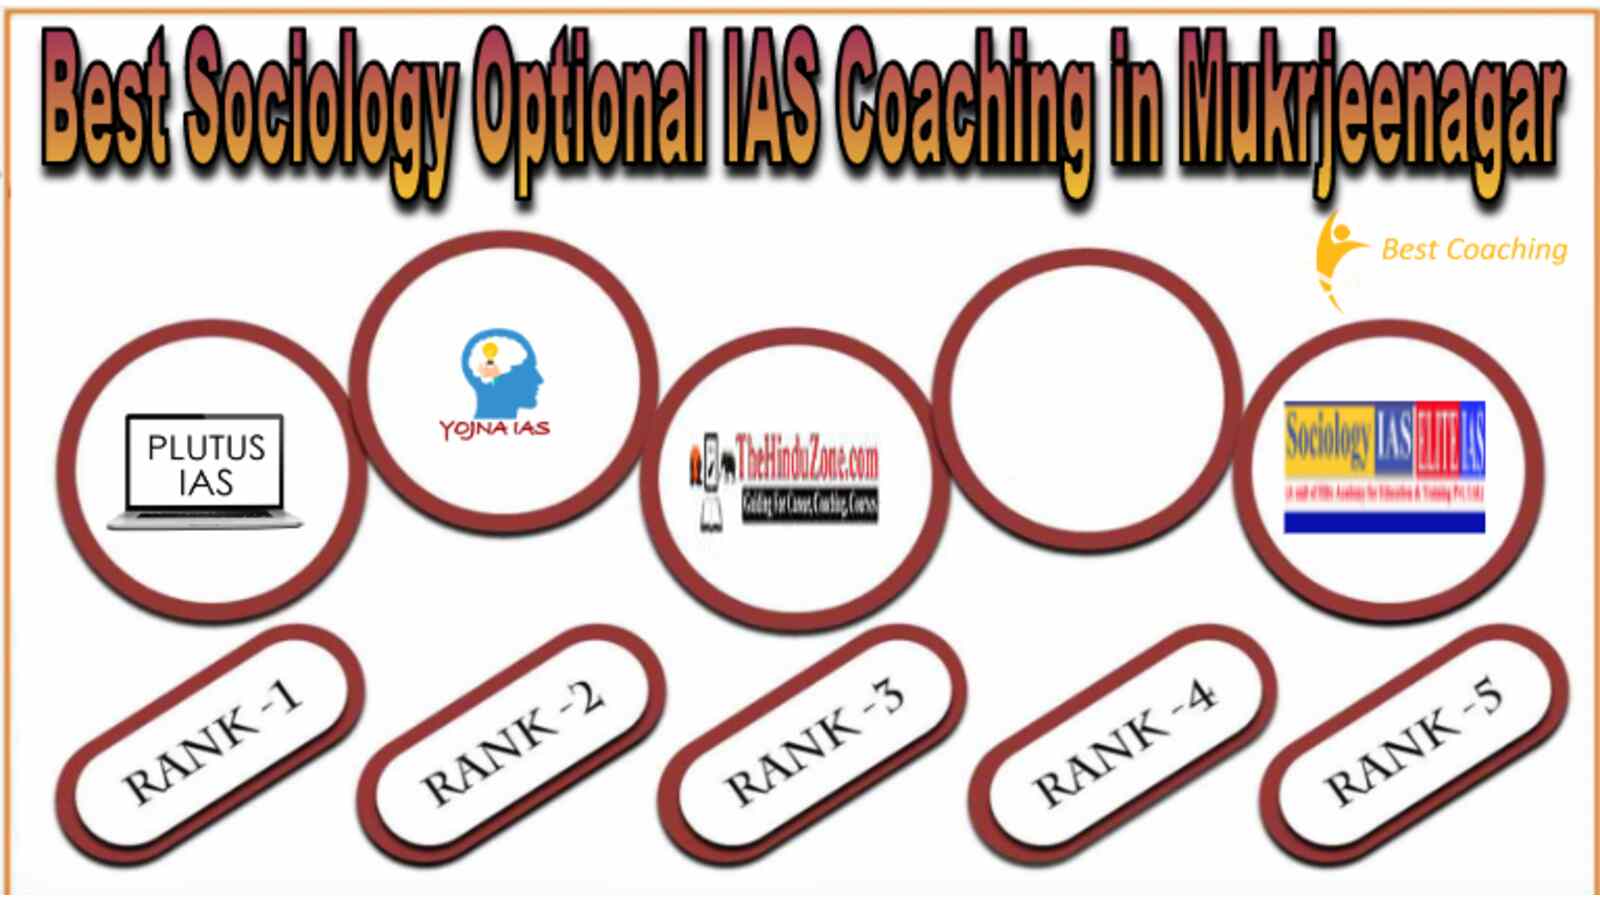 Best Sociology Optional IAS Coaching in Mukrjeenagar